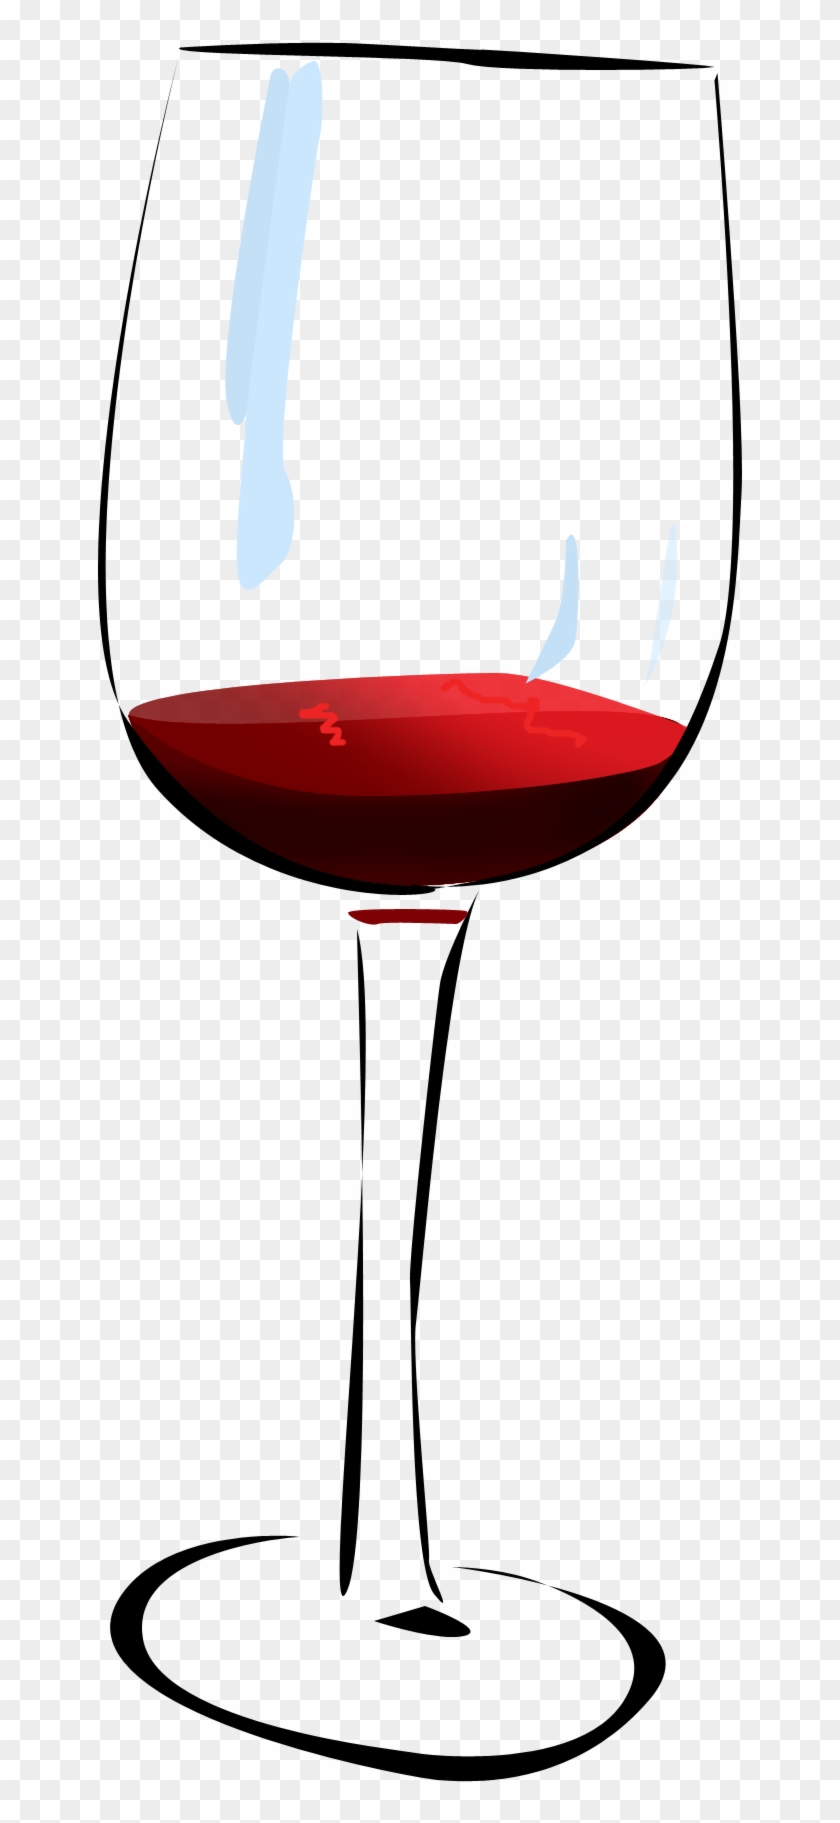 Wineglass Simple Illustration By Stridermelnik Wineglass - Illustration #207125